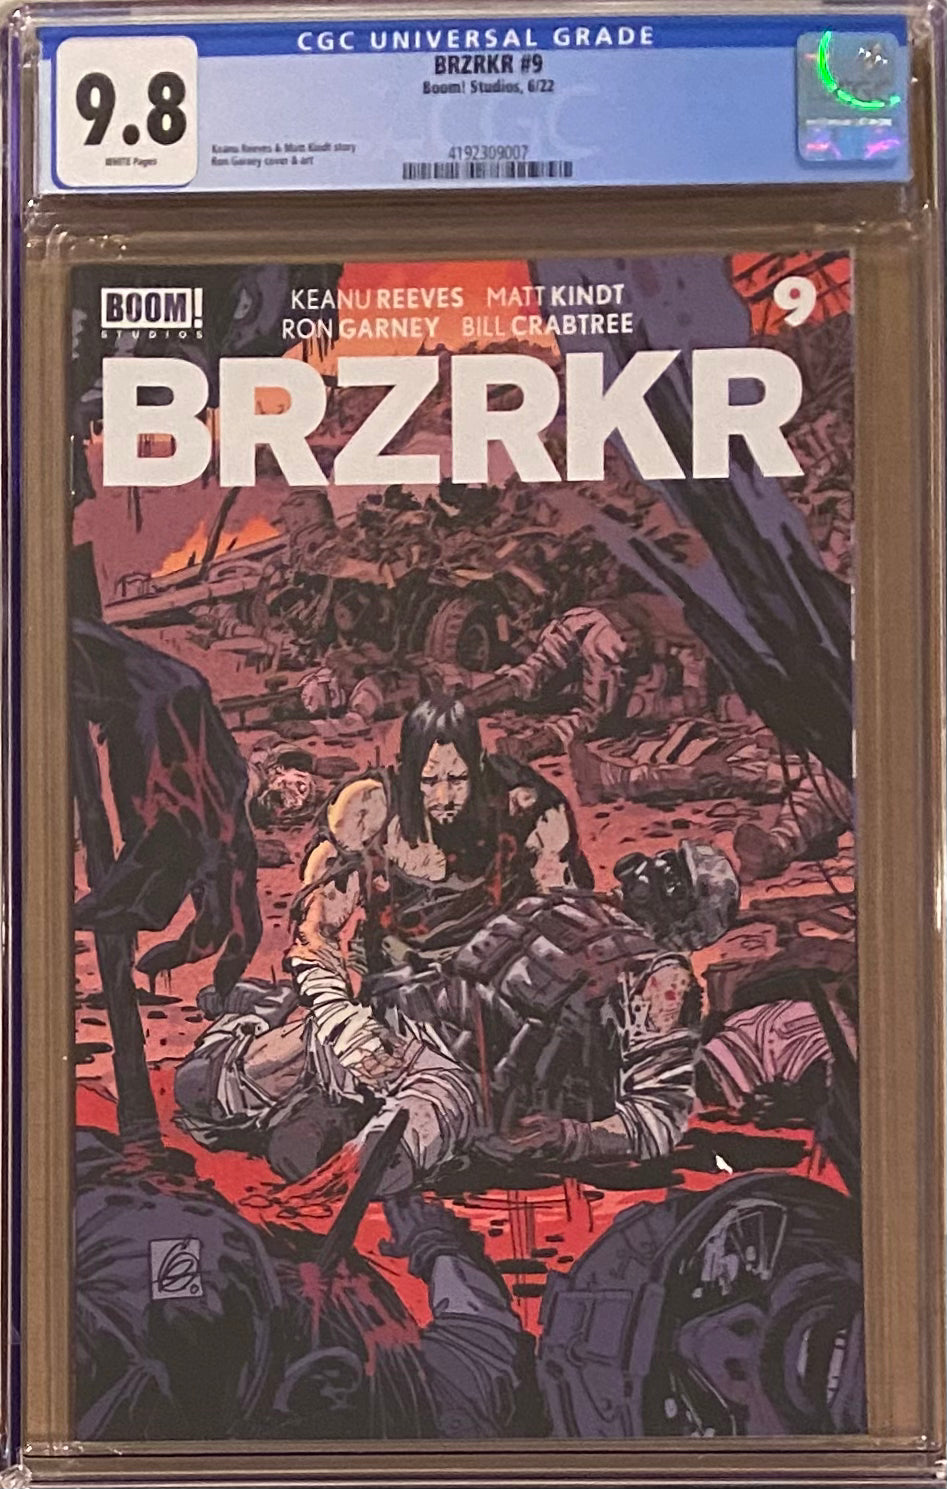 BRZRKR #9 Cover A Garney CGC 9.8 (Berzerker)